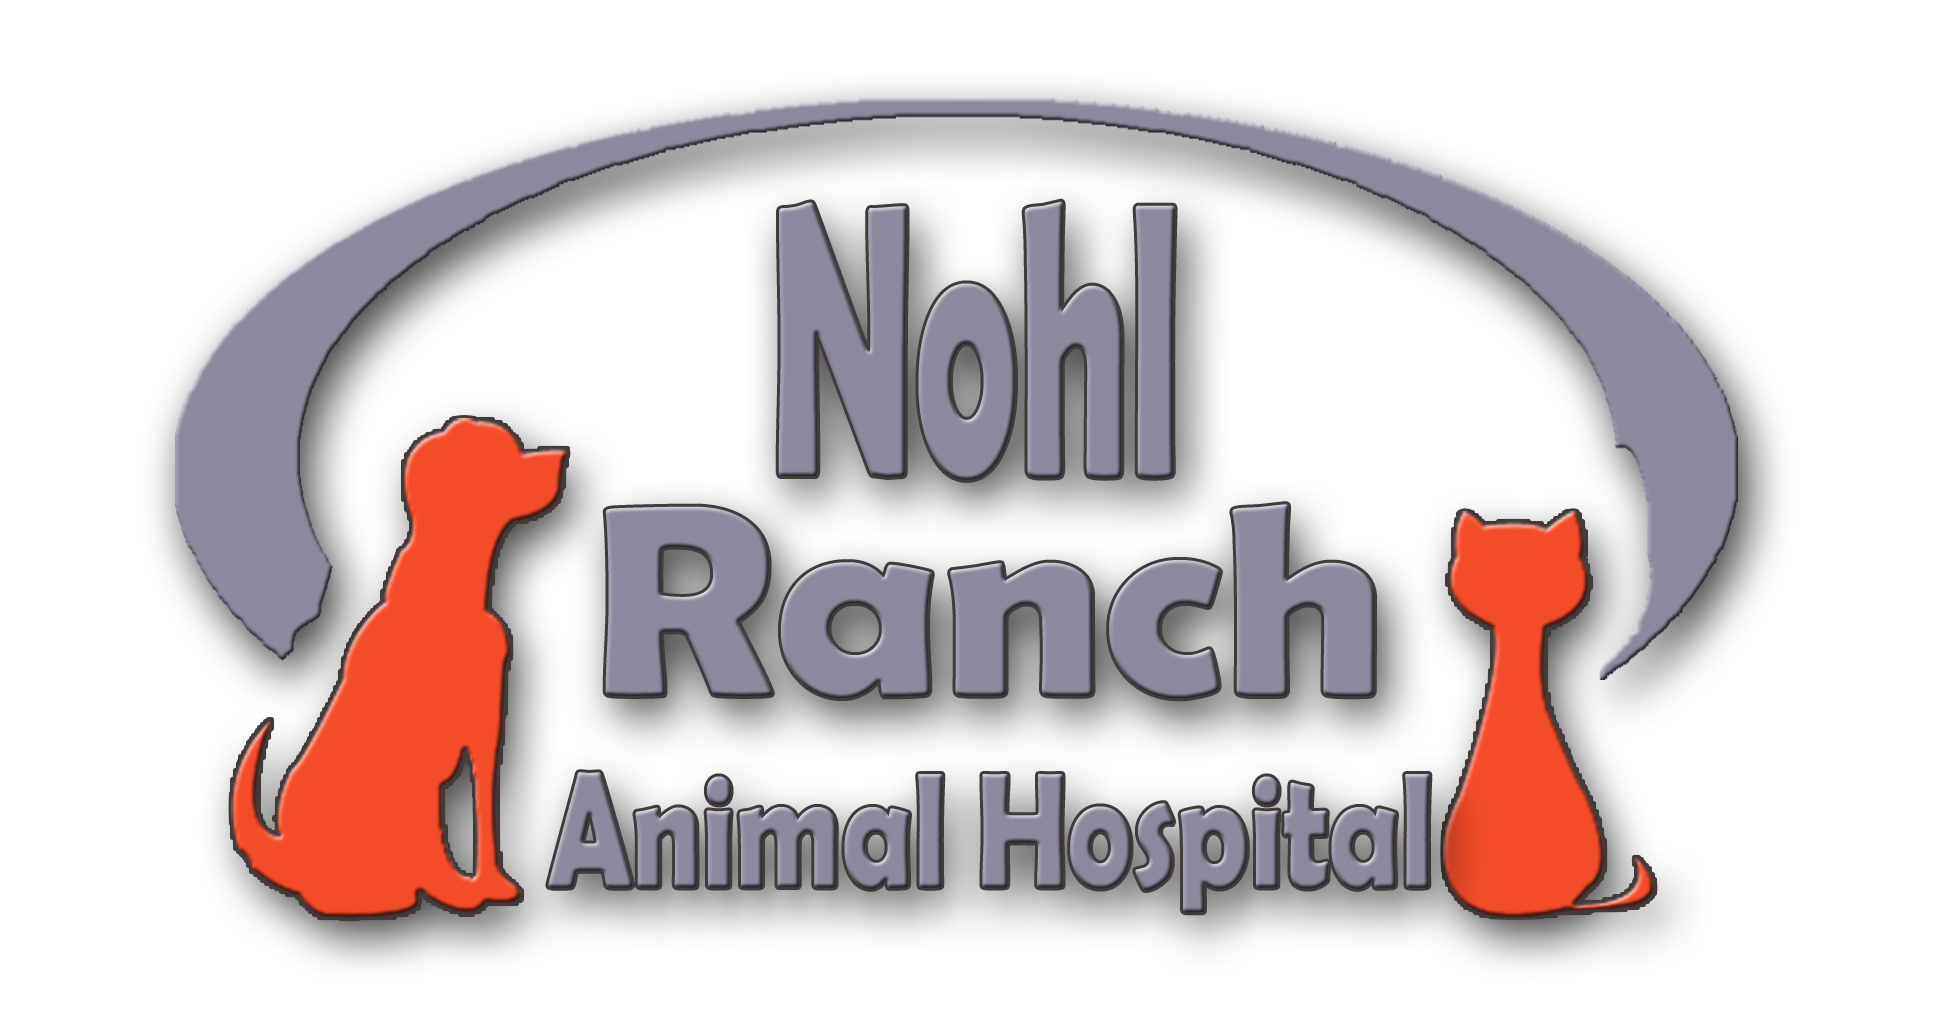 Nohl Ranch Animal Hospital in Orange | Pet Care | Vet Hospital